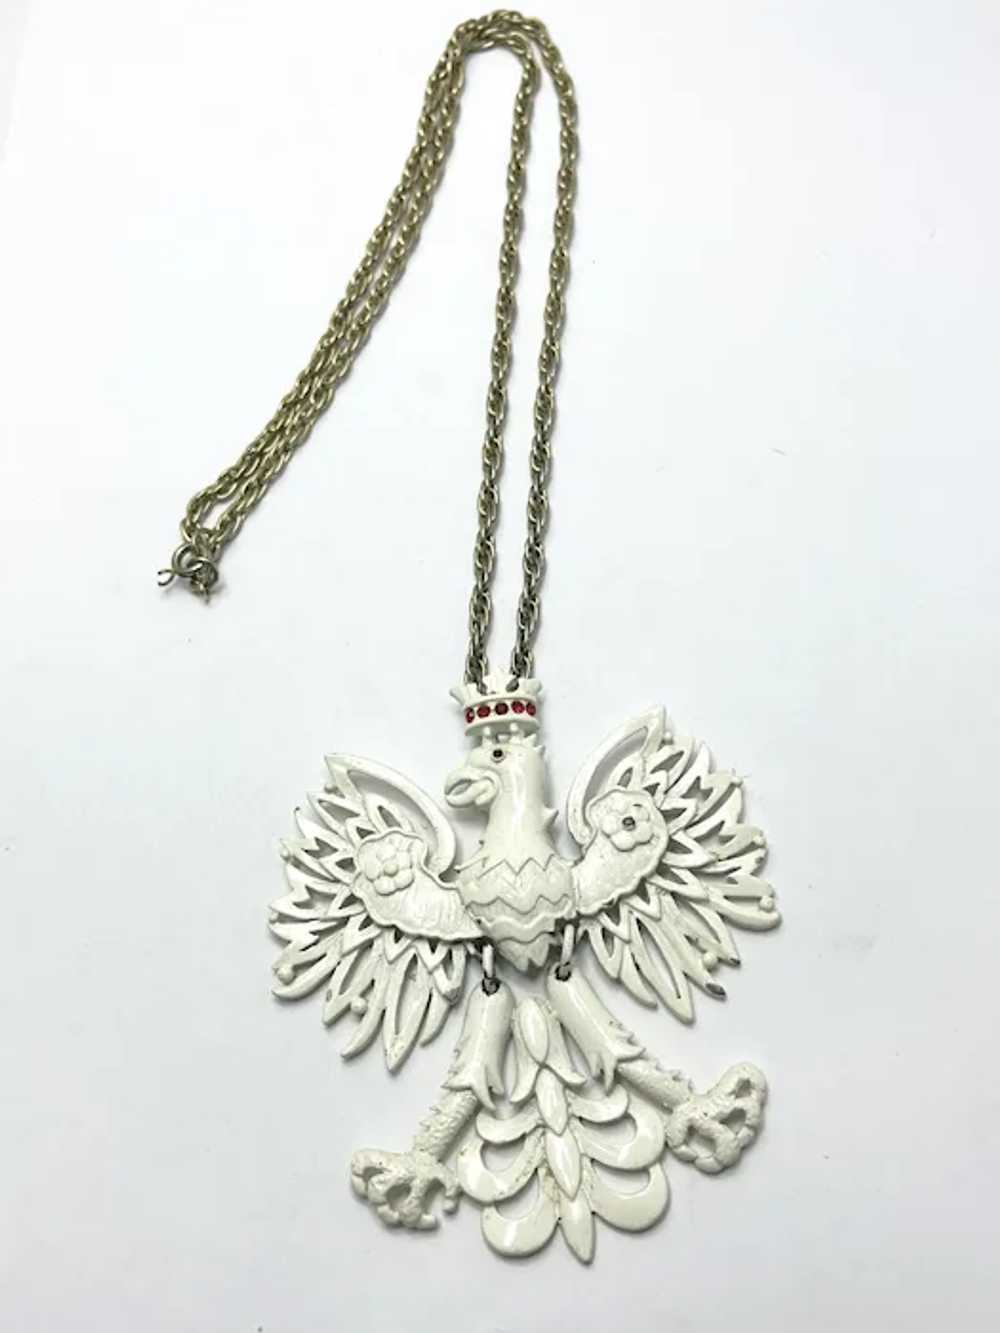 Vintage White Enamel Eagle Pendant Necklace - image 4